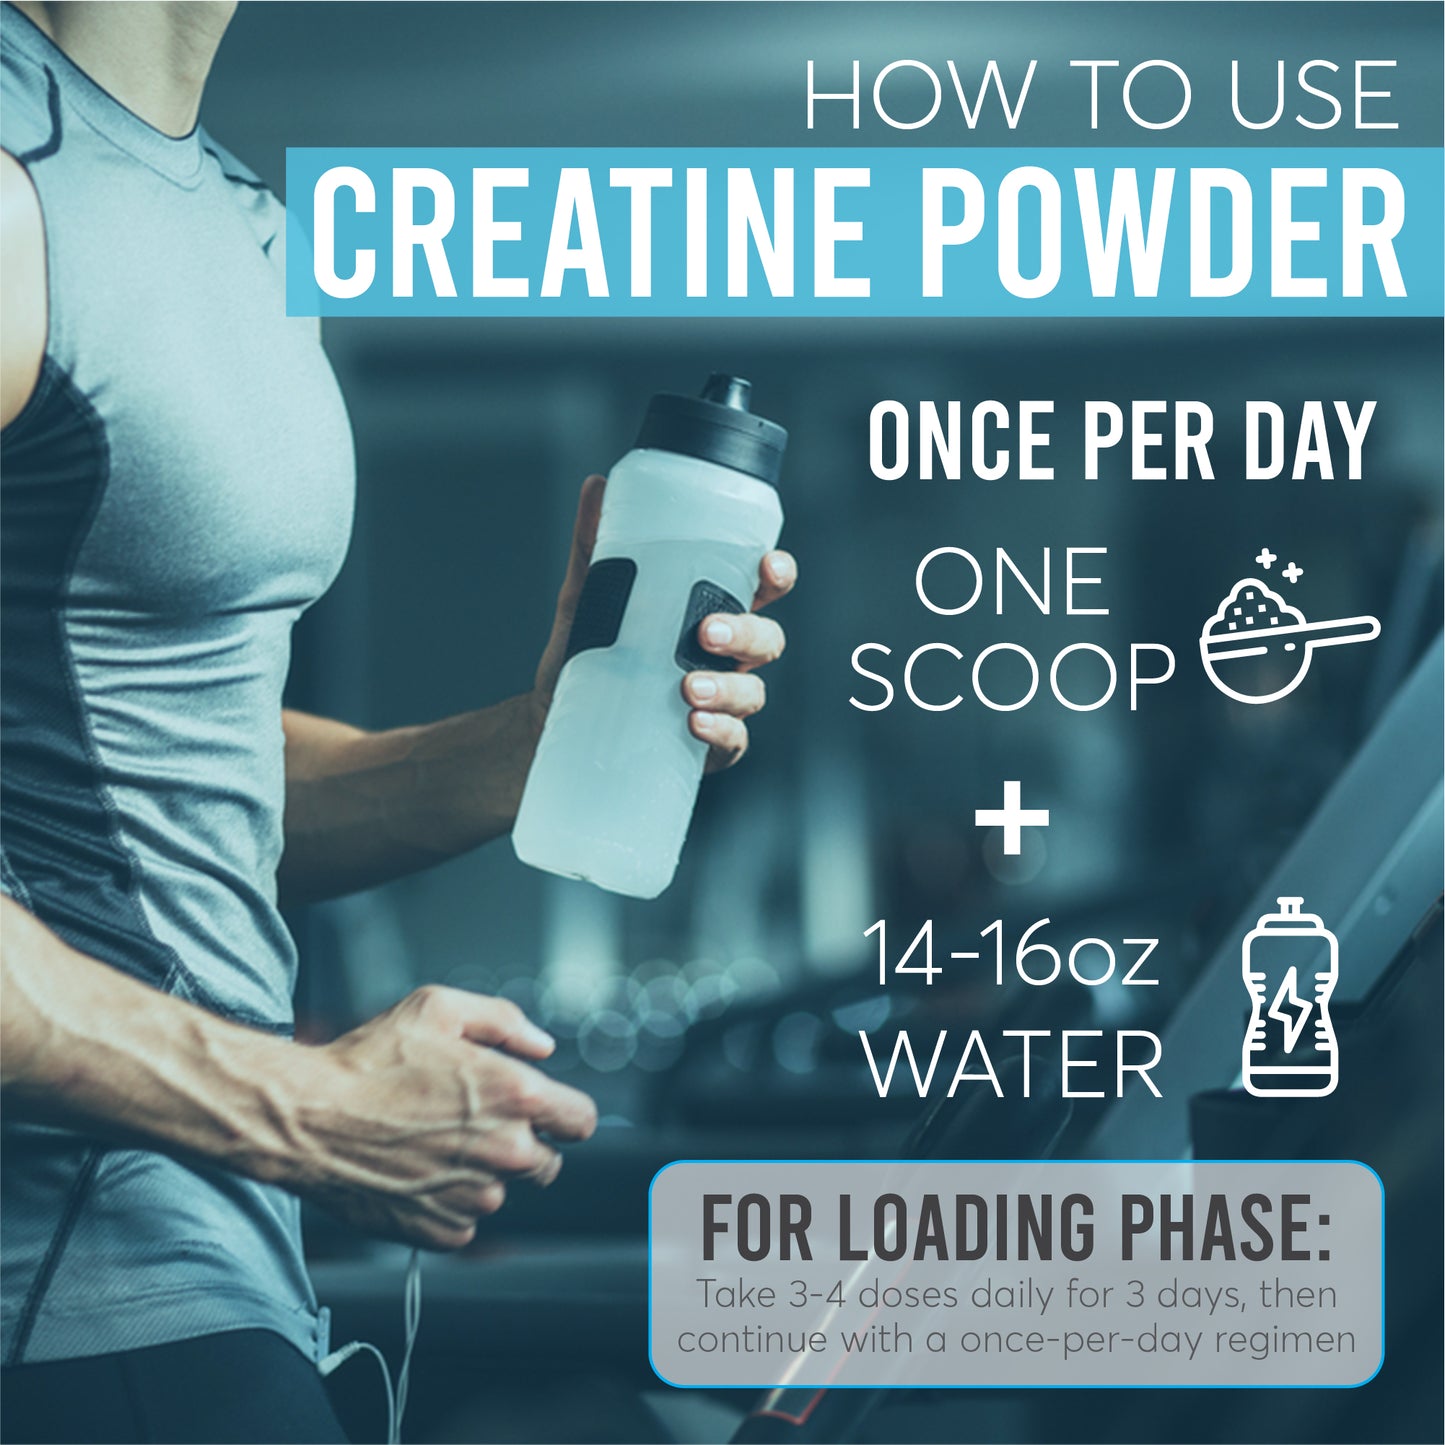 Creatine Monohydrate Powder (90 Servings)